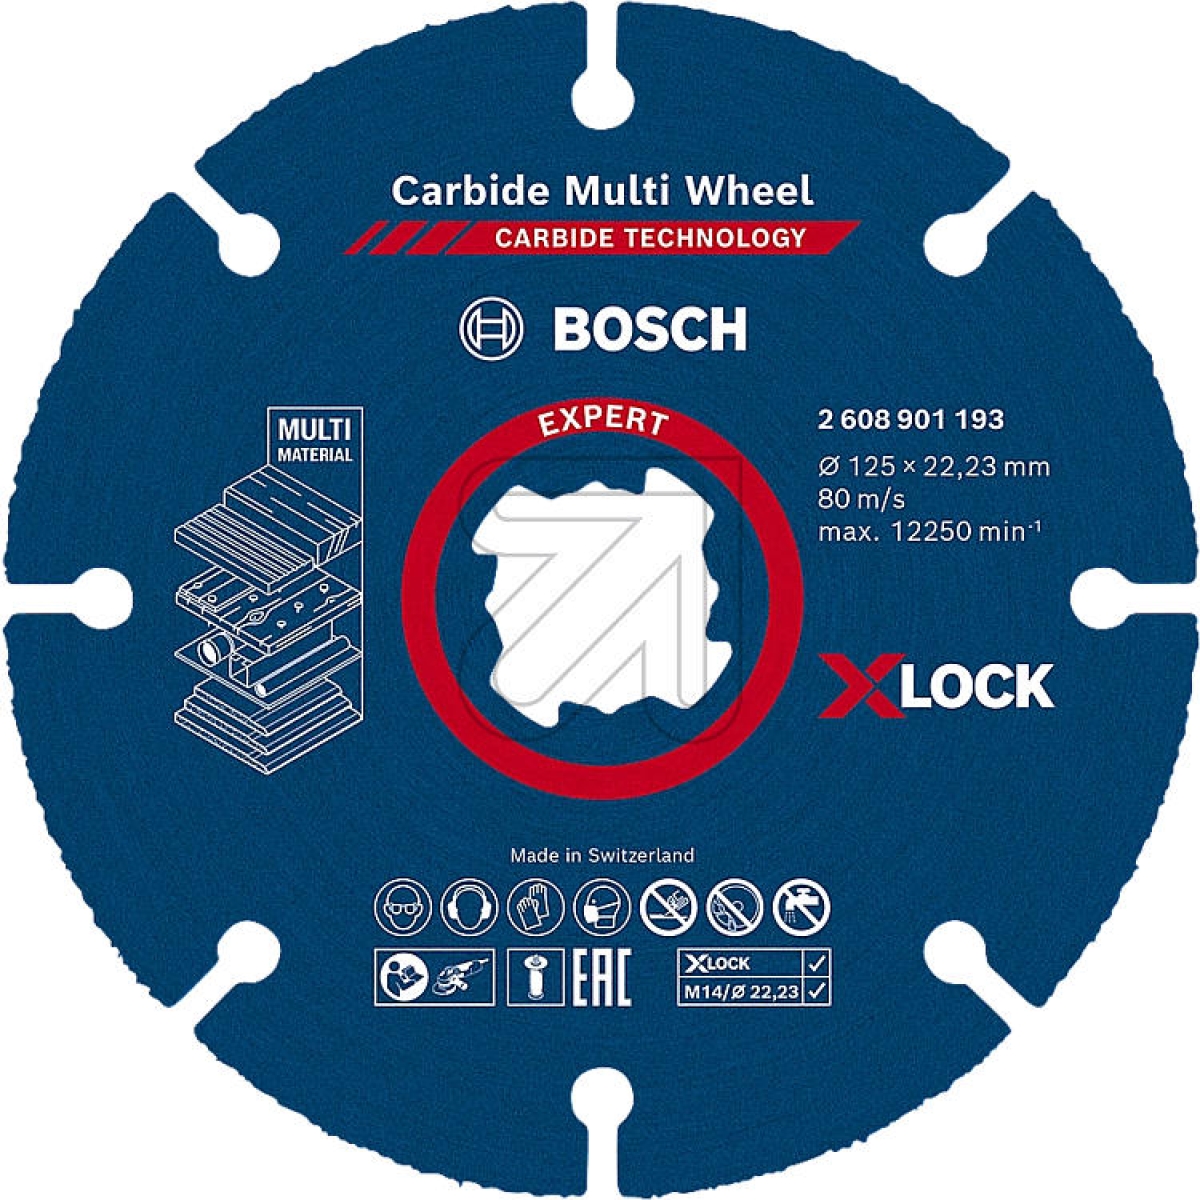 BoschX-LOCK CMW 125x22.23mm EXPERT 2608901193Article-No: 749240